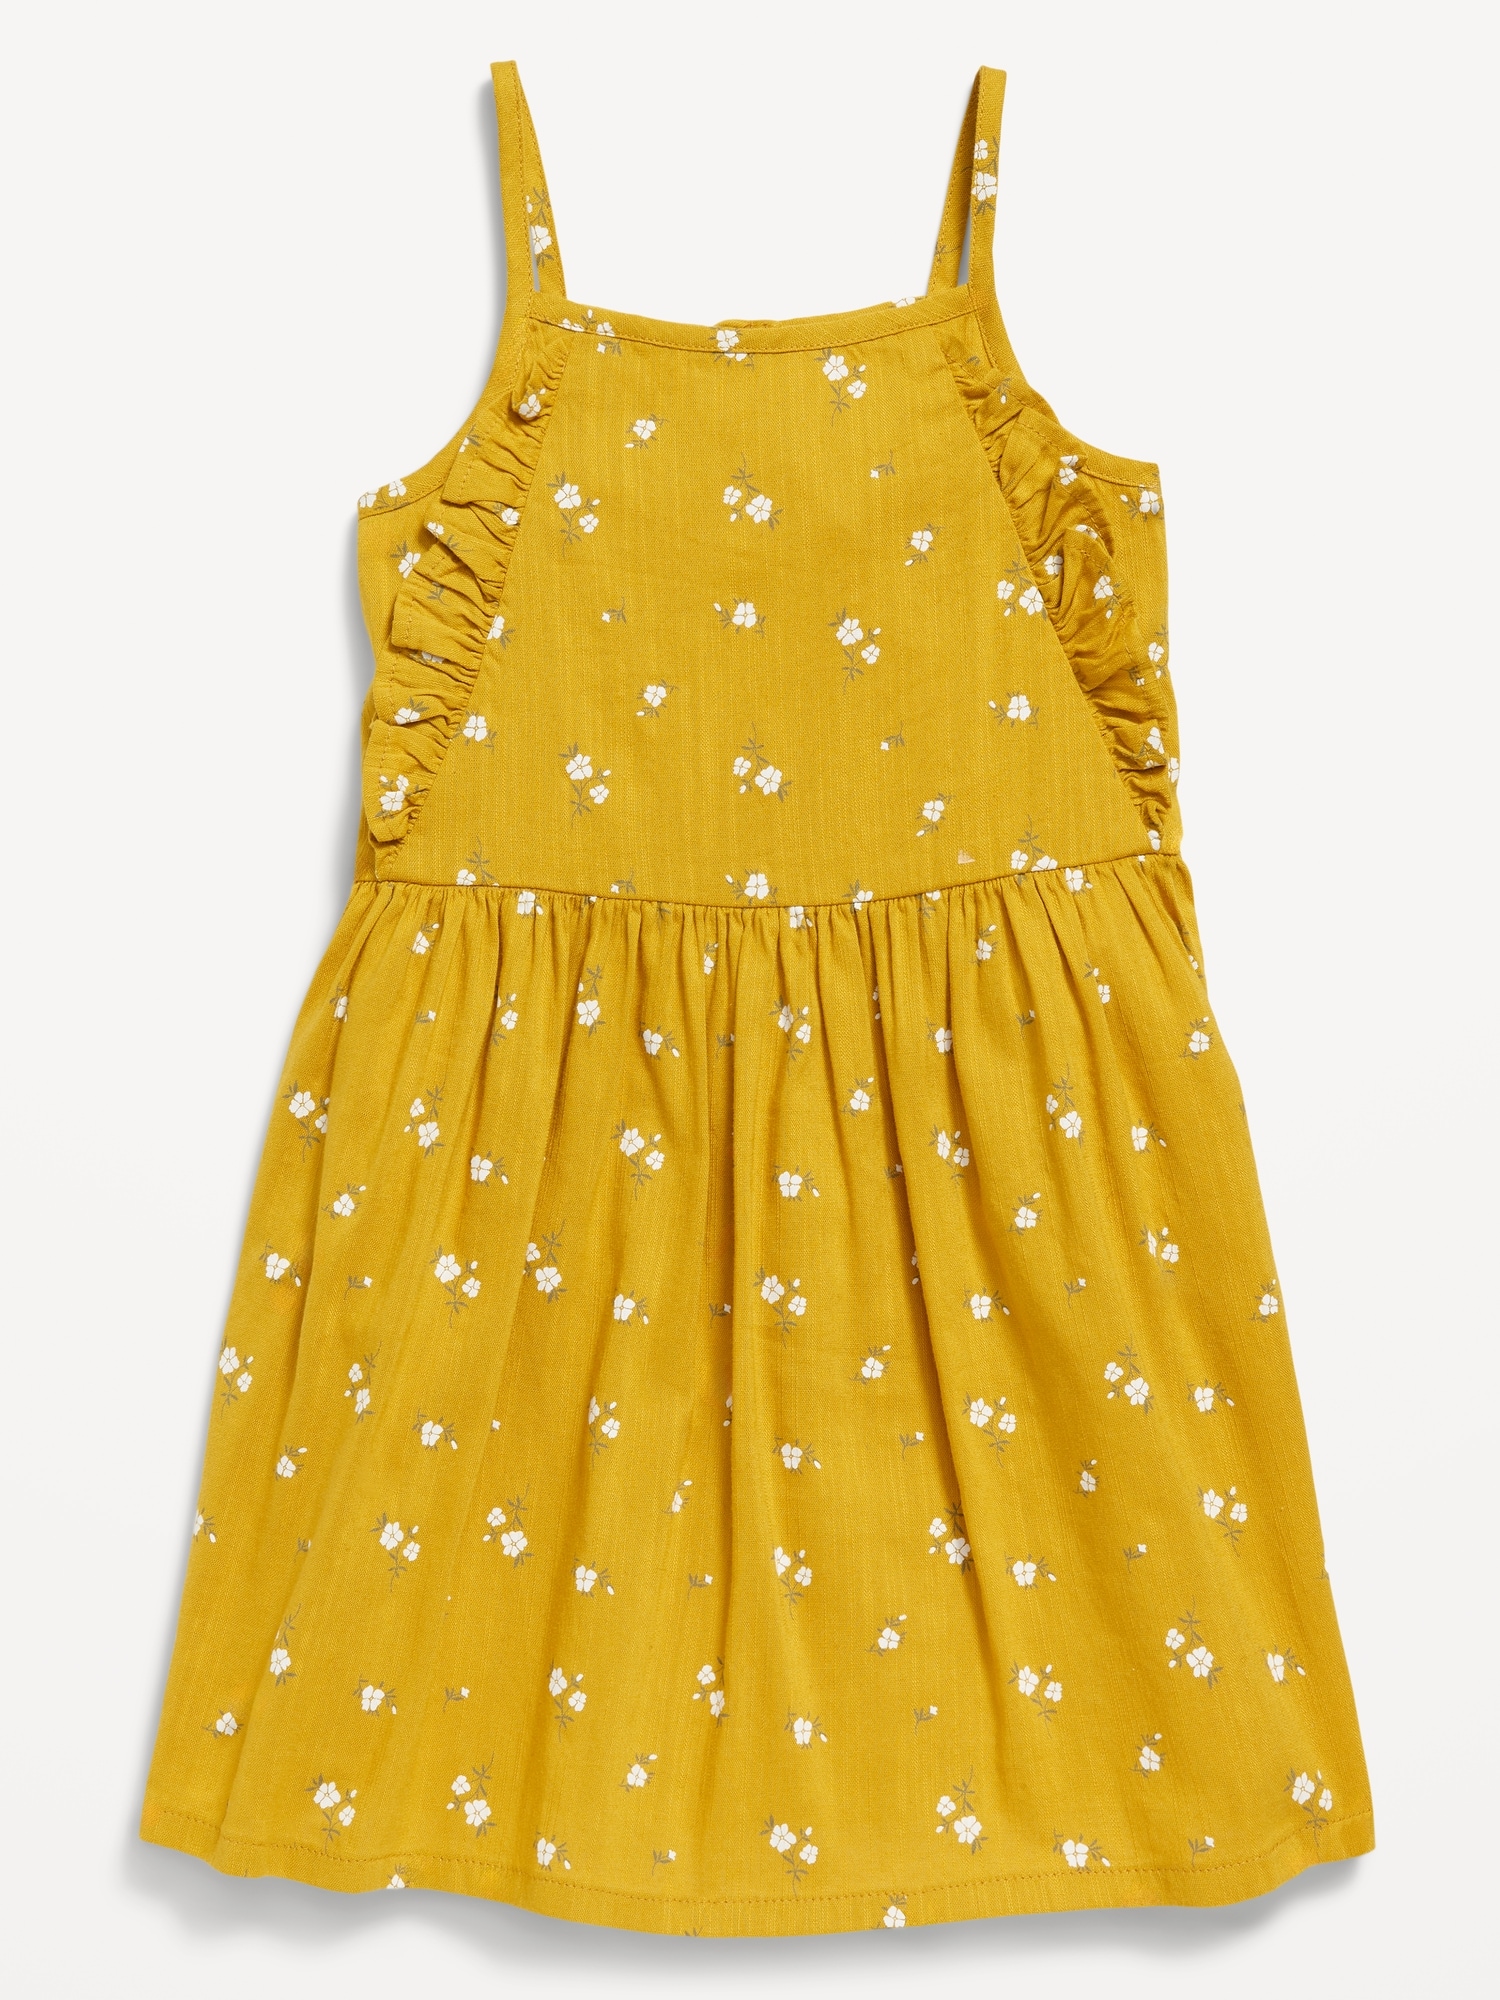 Printed Sleeveless Ruffle-Trim Dress for Toddler Girls